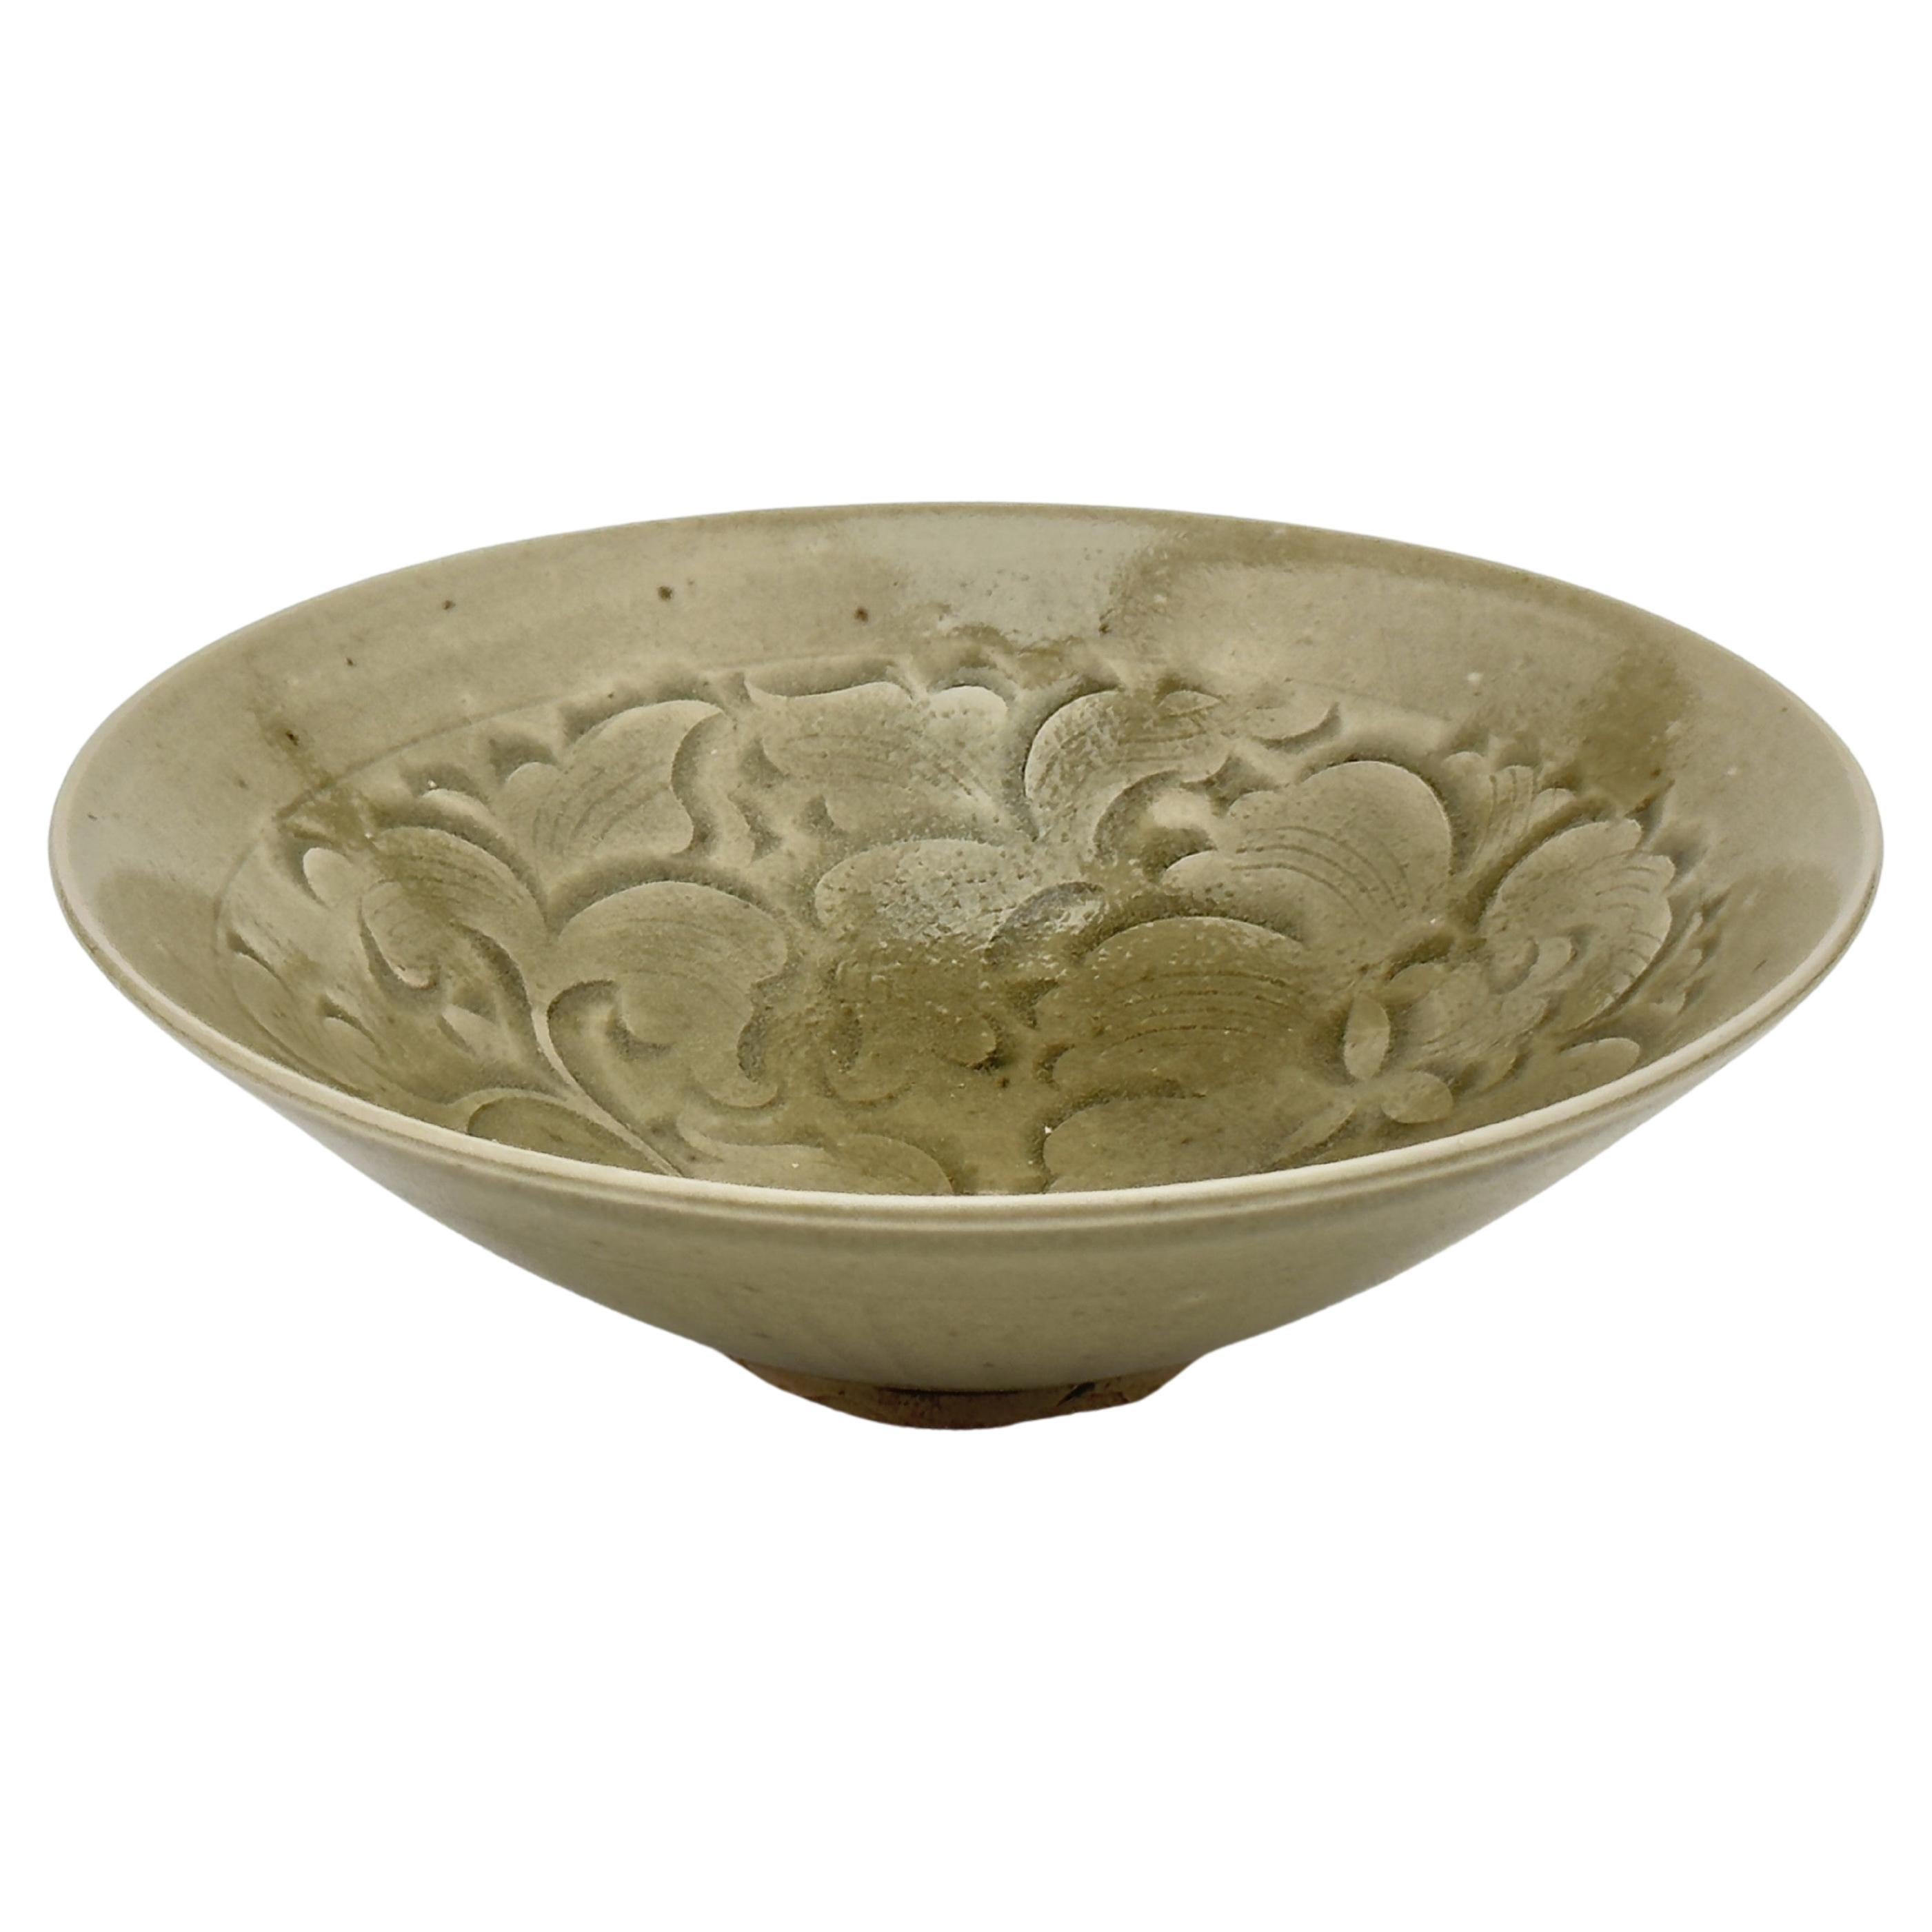 Carved 'Yaozhou' Celadon-Glazed Bowl, Song Dynasty